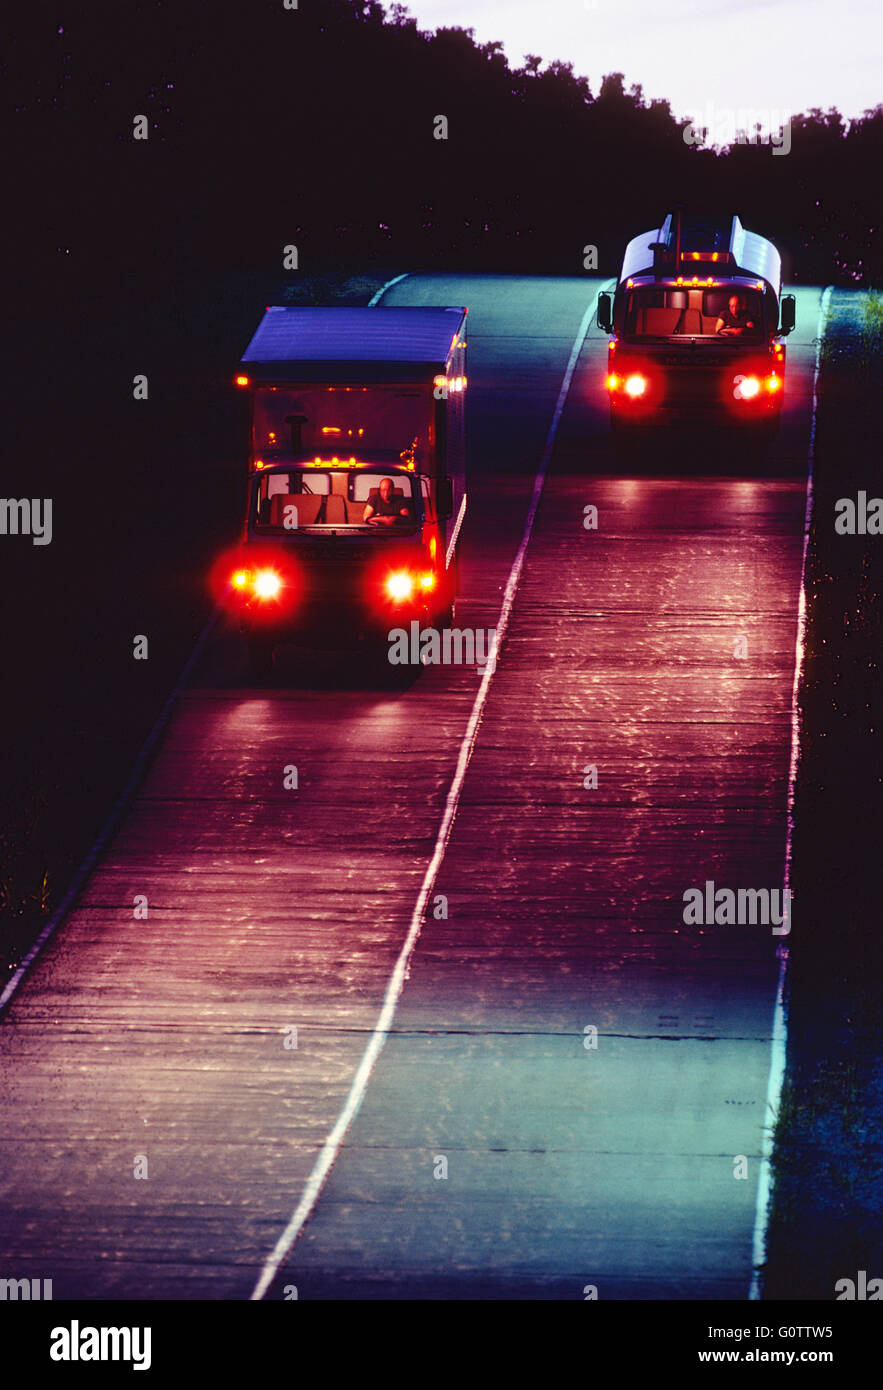 Trucks traveling on road at night Stock Photo